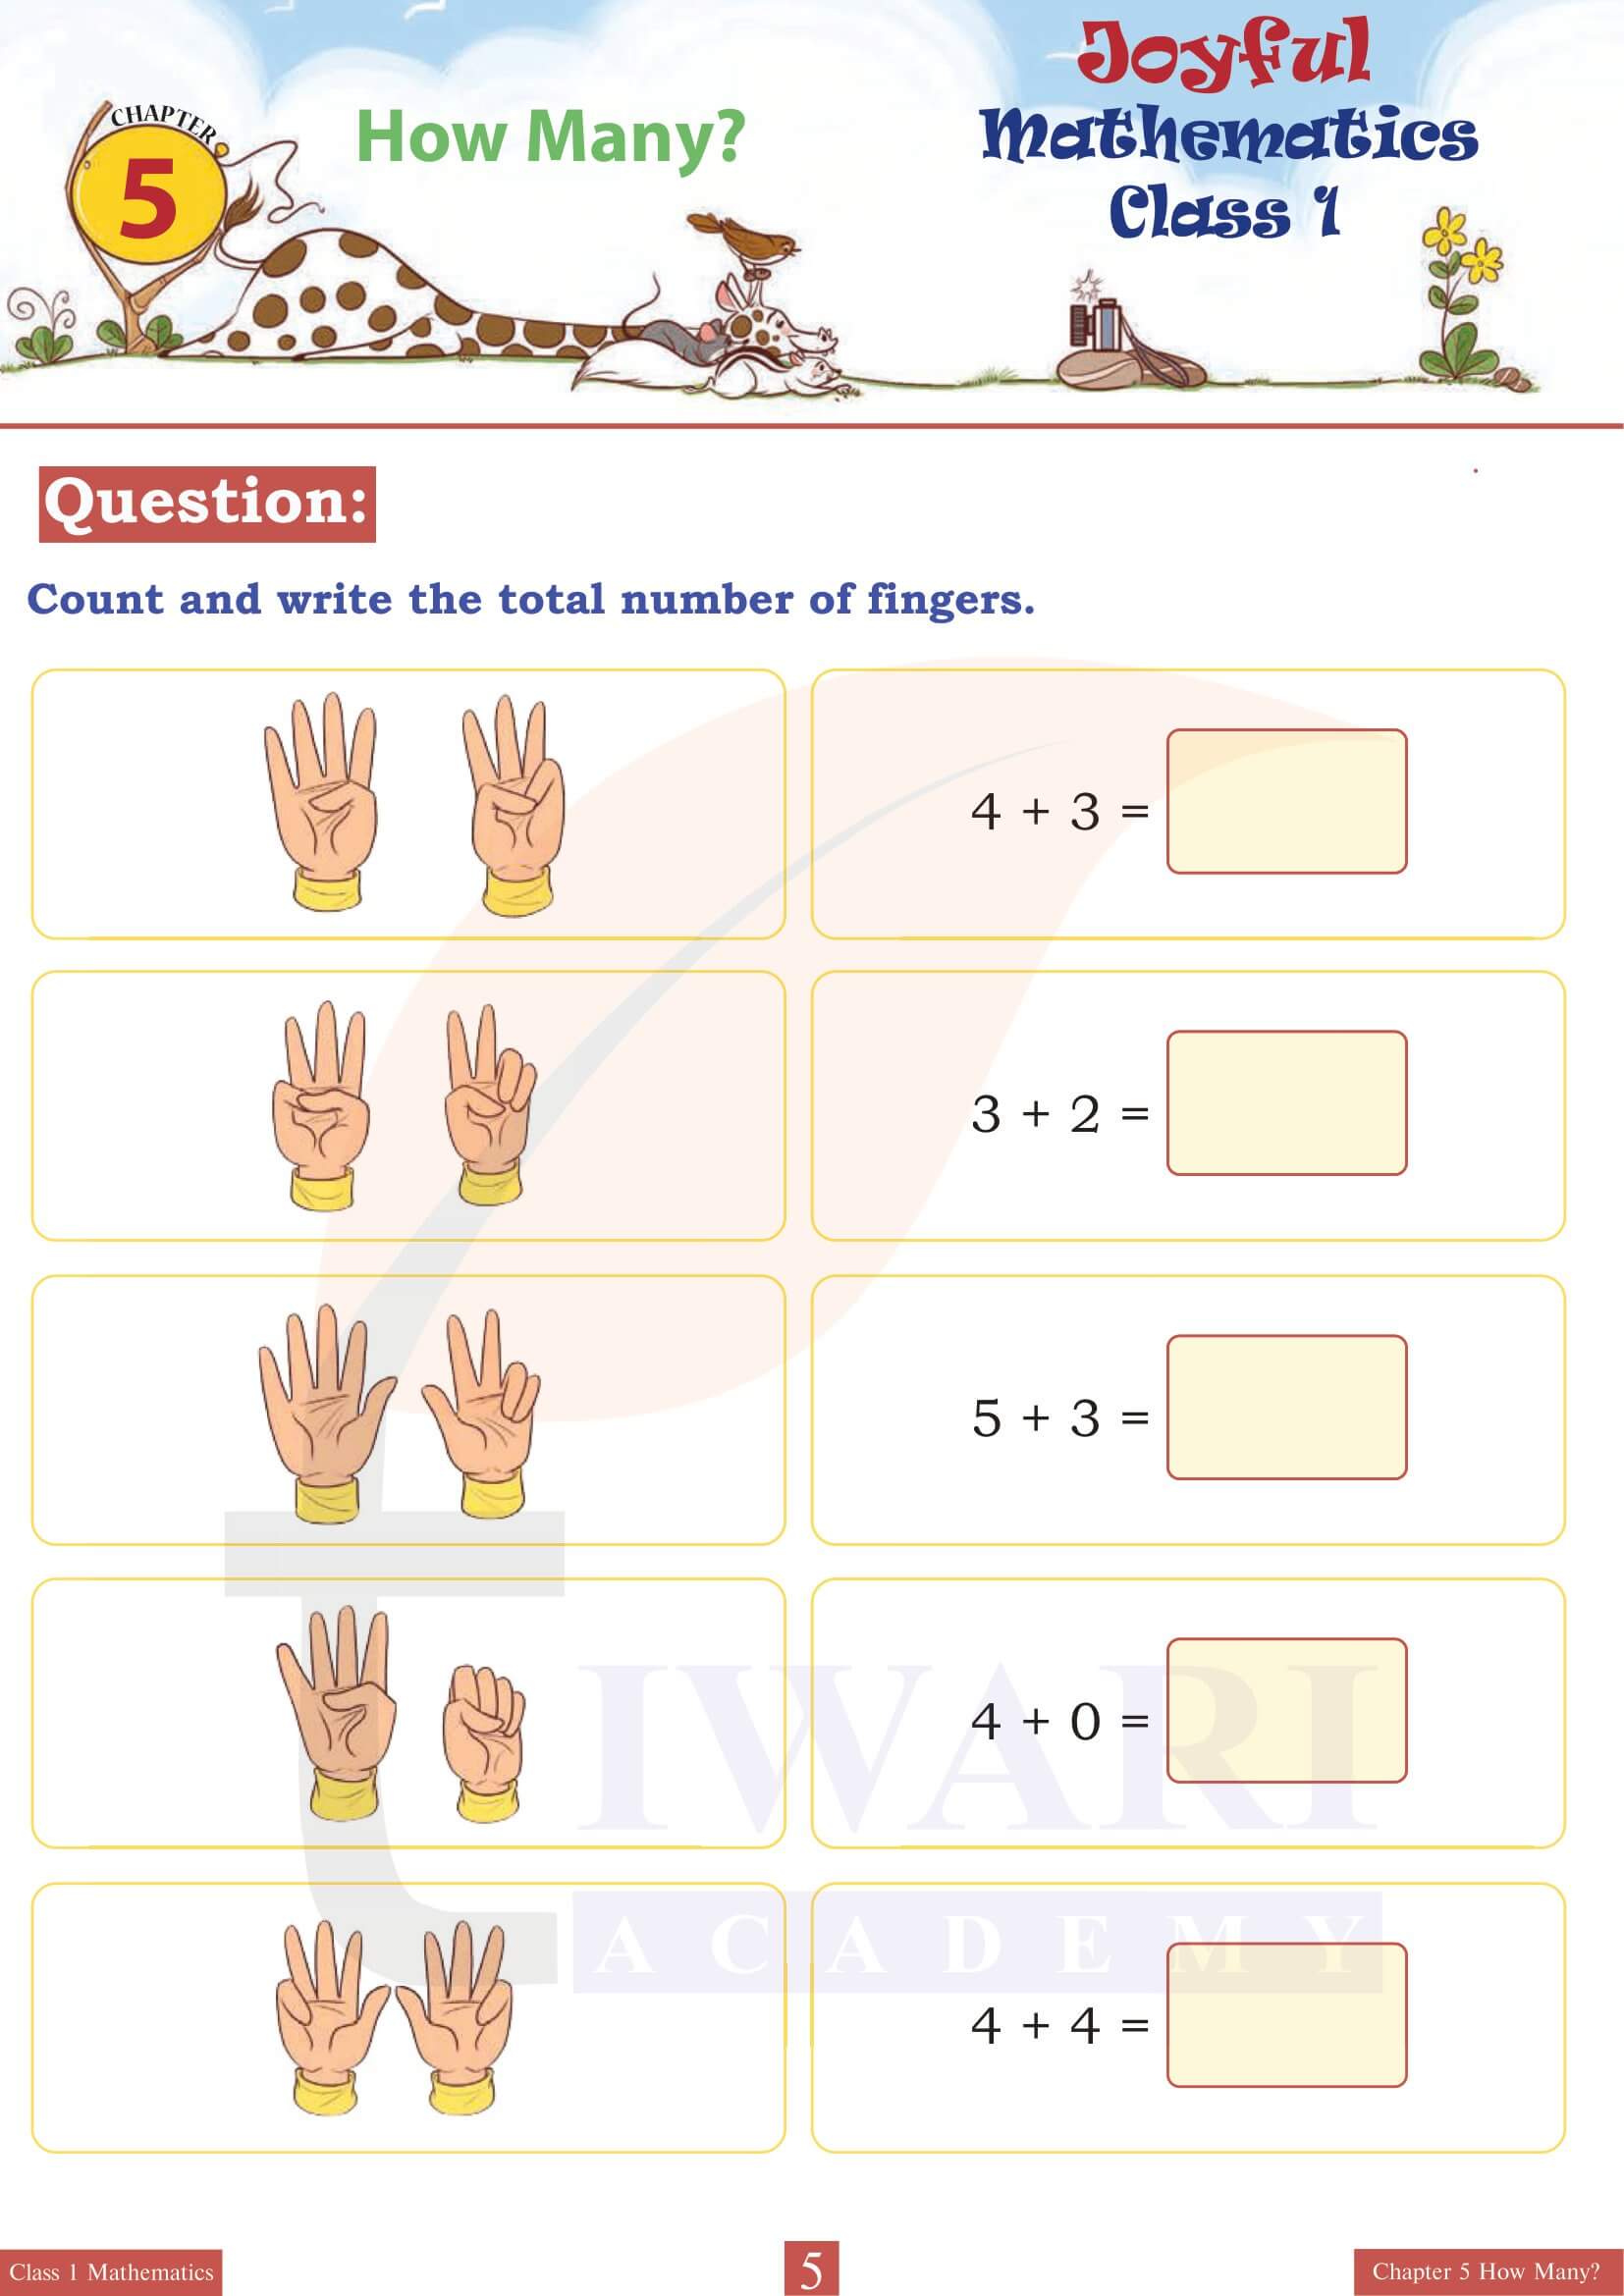 Class 1 Maths Joyful Chapter 5 Answers